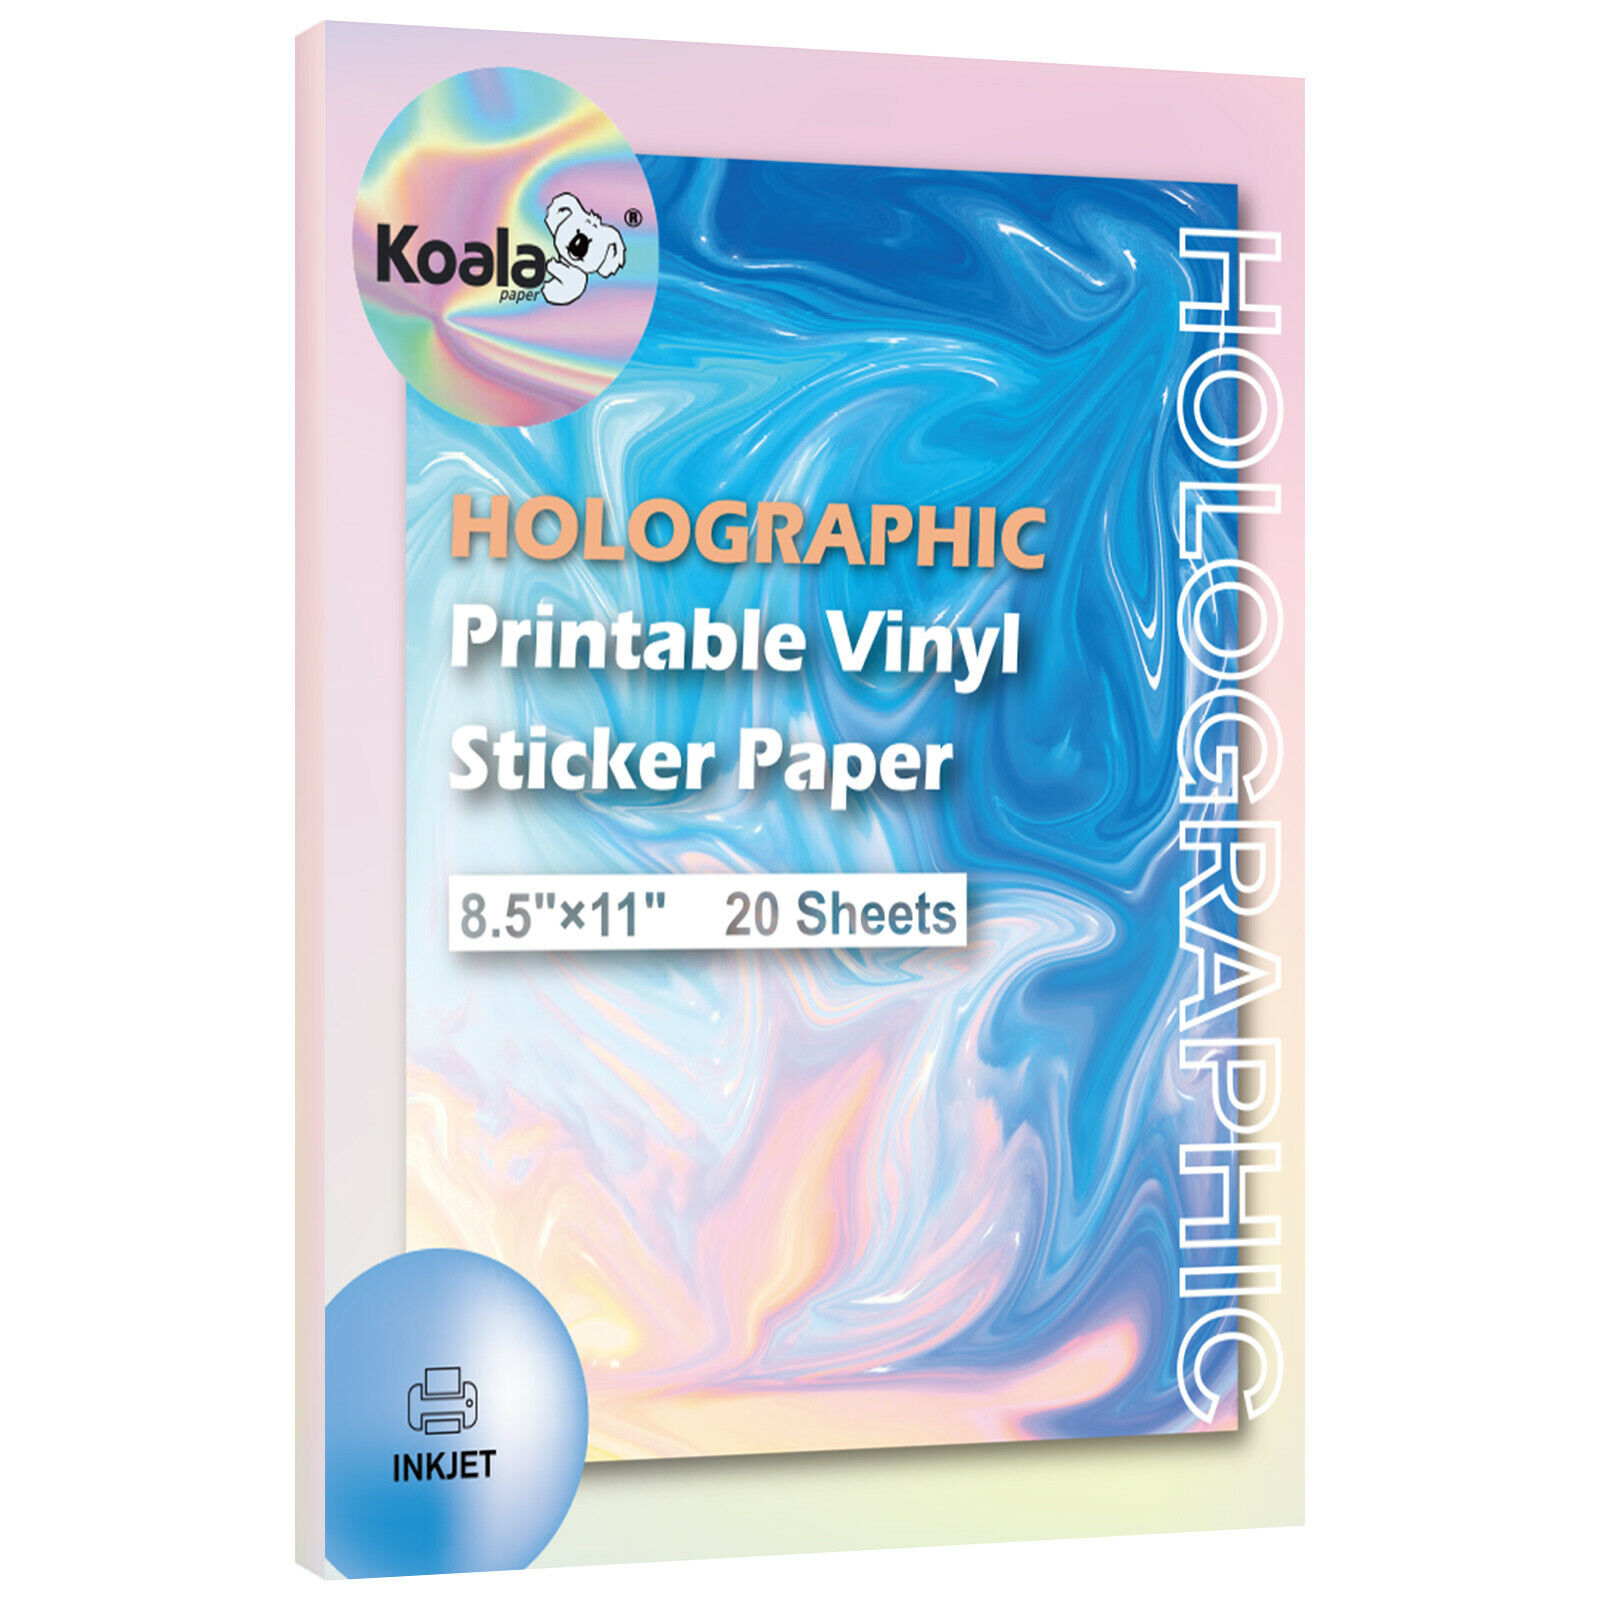 20 Koala Holographic Sticker Paper Waterproof Printable Vinyl Sheet Inkjet Laser